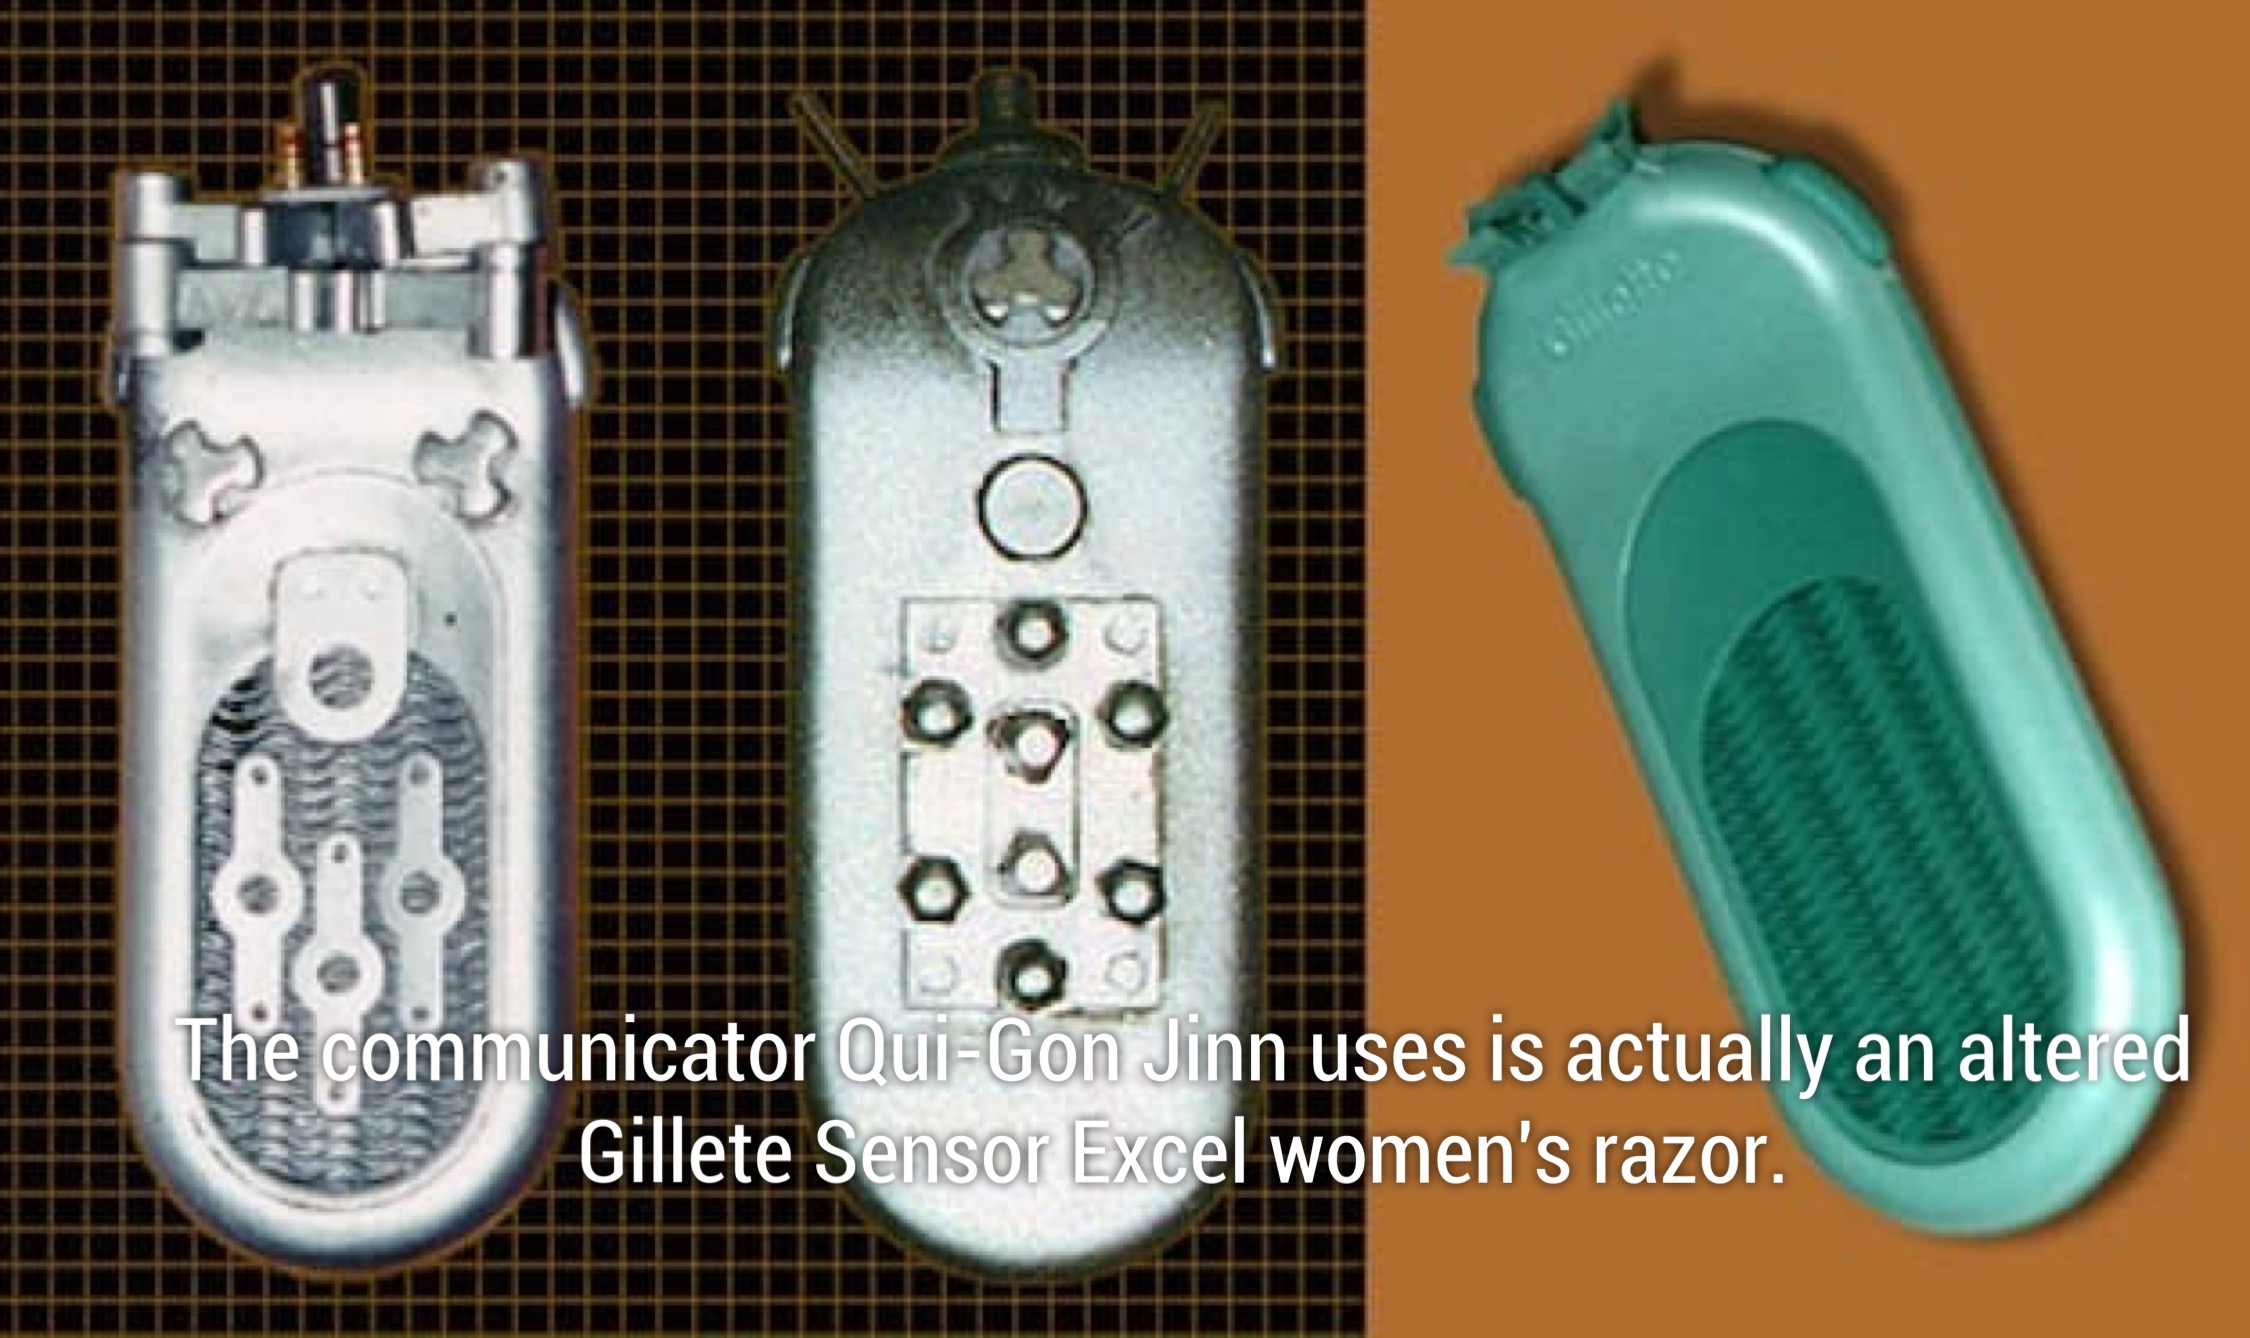 qui gon jinn communicator - The communicator QuiGon Jinn uses is actually an altered Gillete Sensor Excel women's razor.